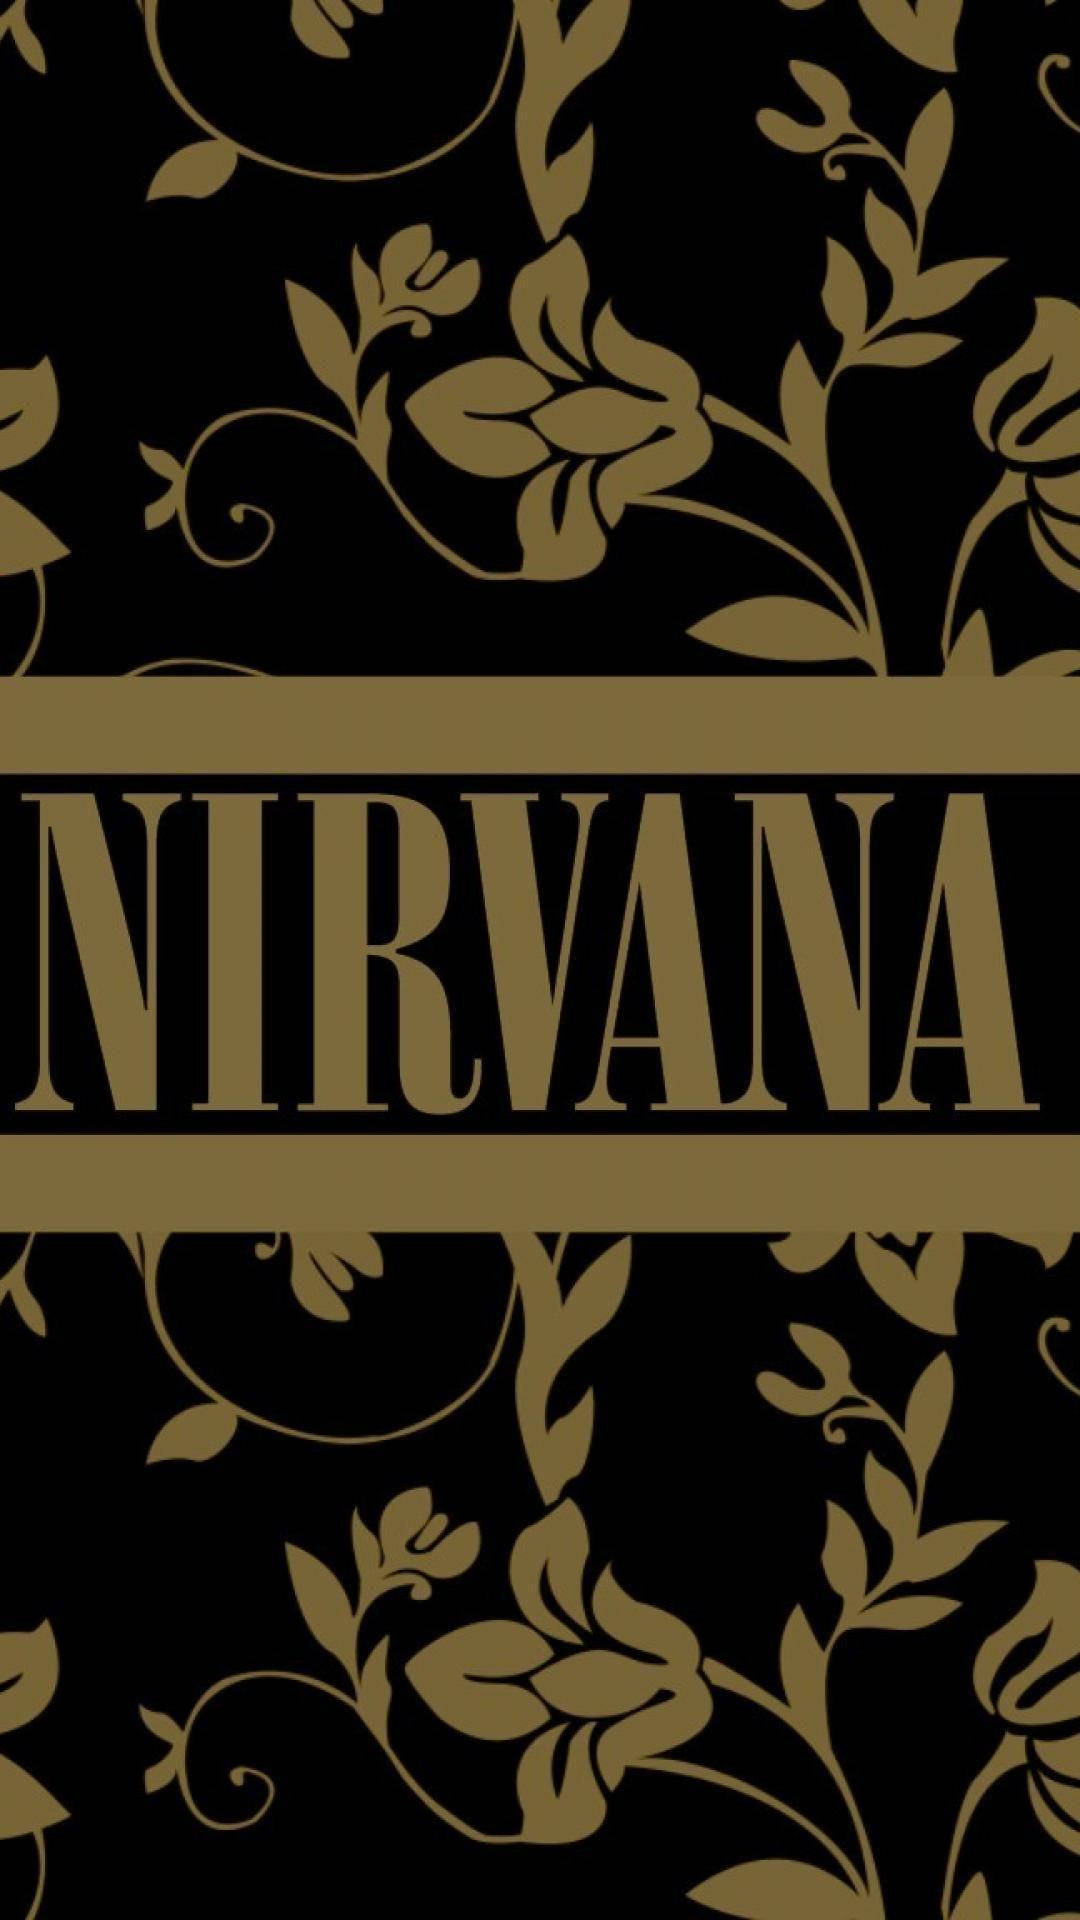 Nirvana With Golden Flower Background